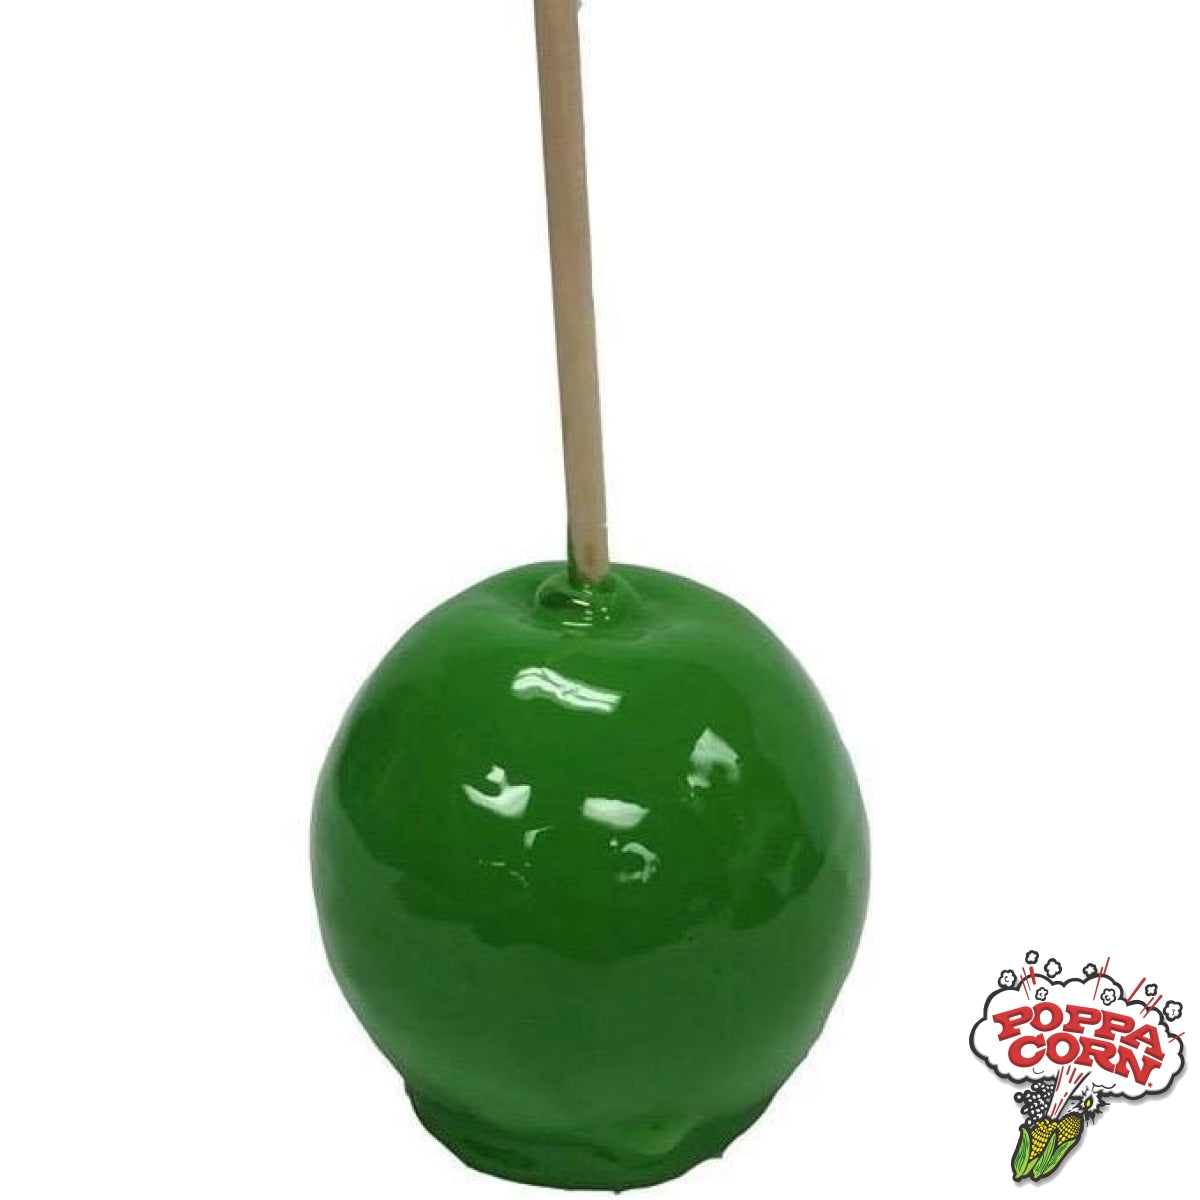 CND006 - Lime Green Candy Apple Magic - 18 x 15 oz Bags/Case - Poppa Corn Corp